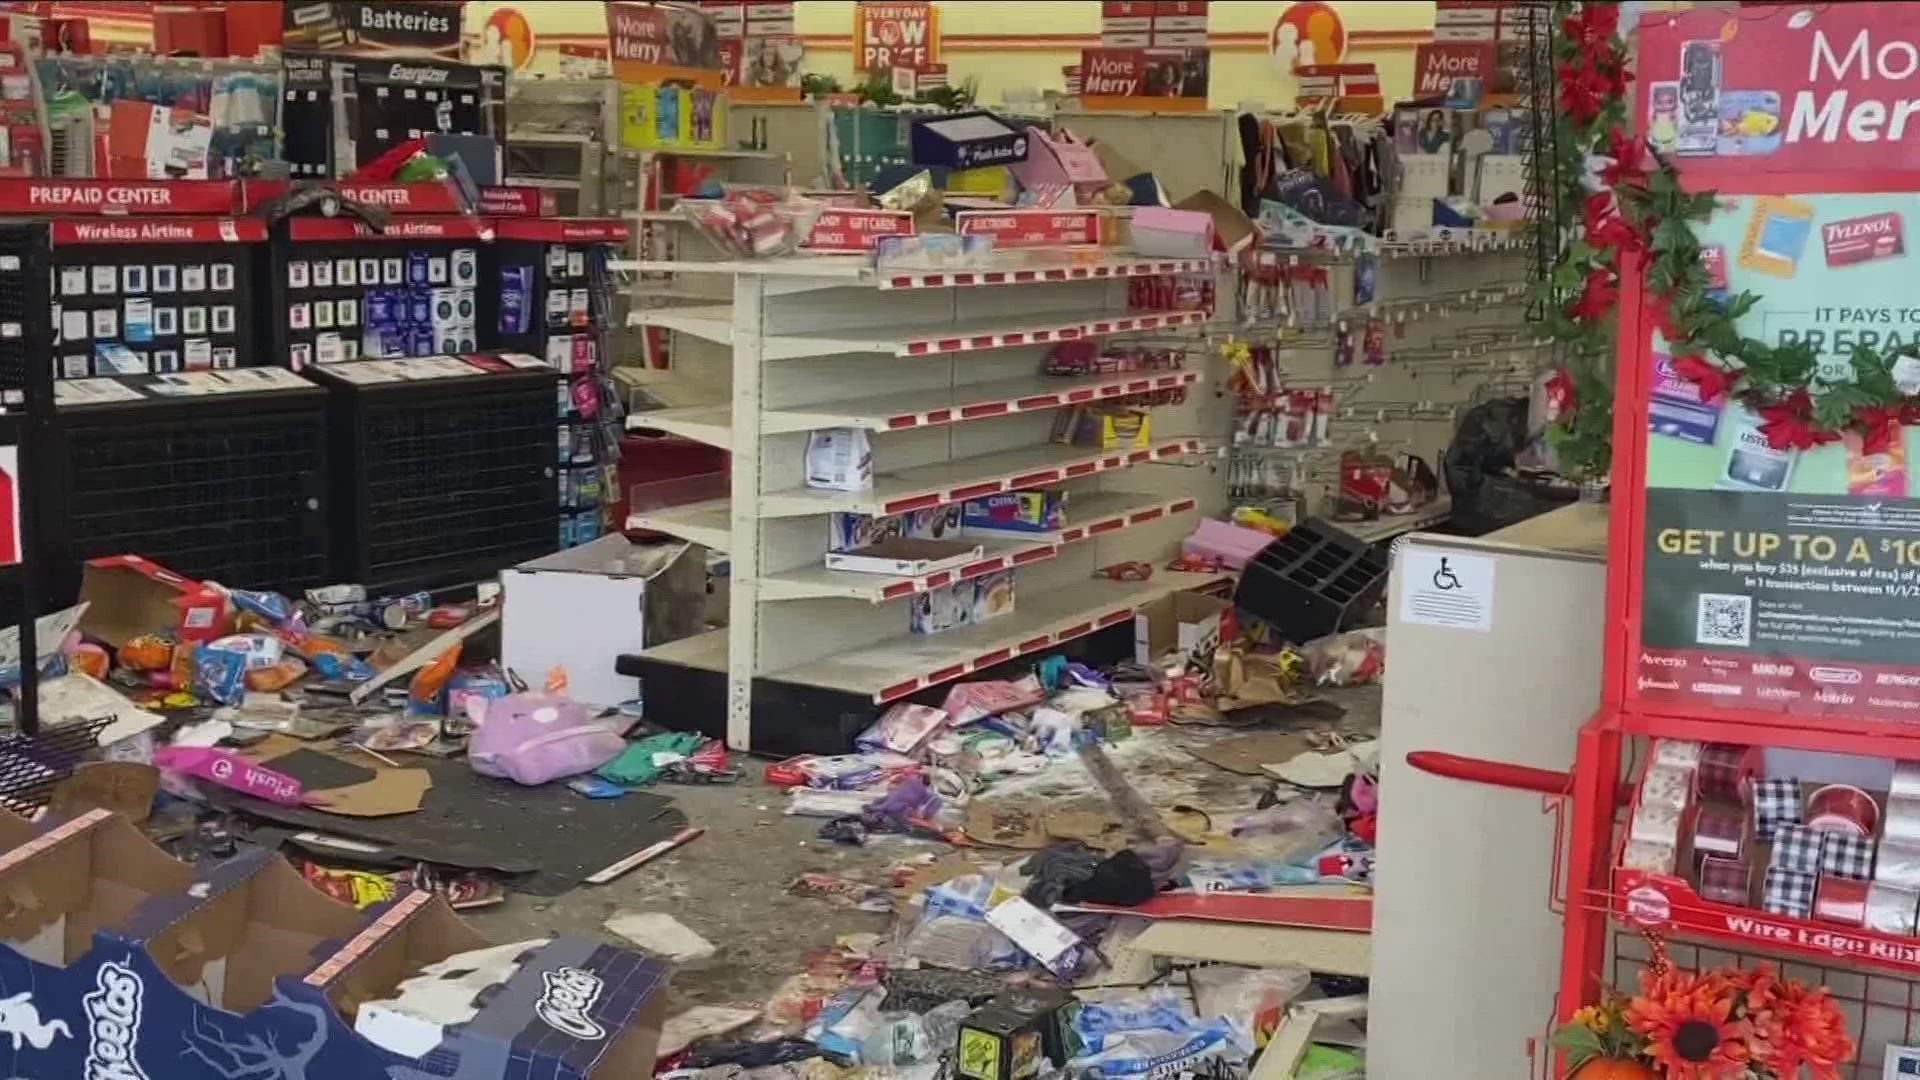 Reports of looting in Buffalo